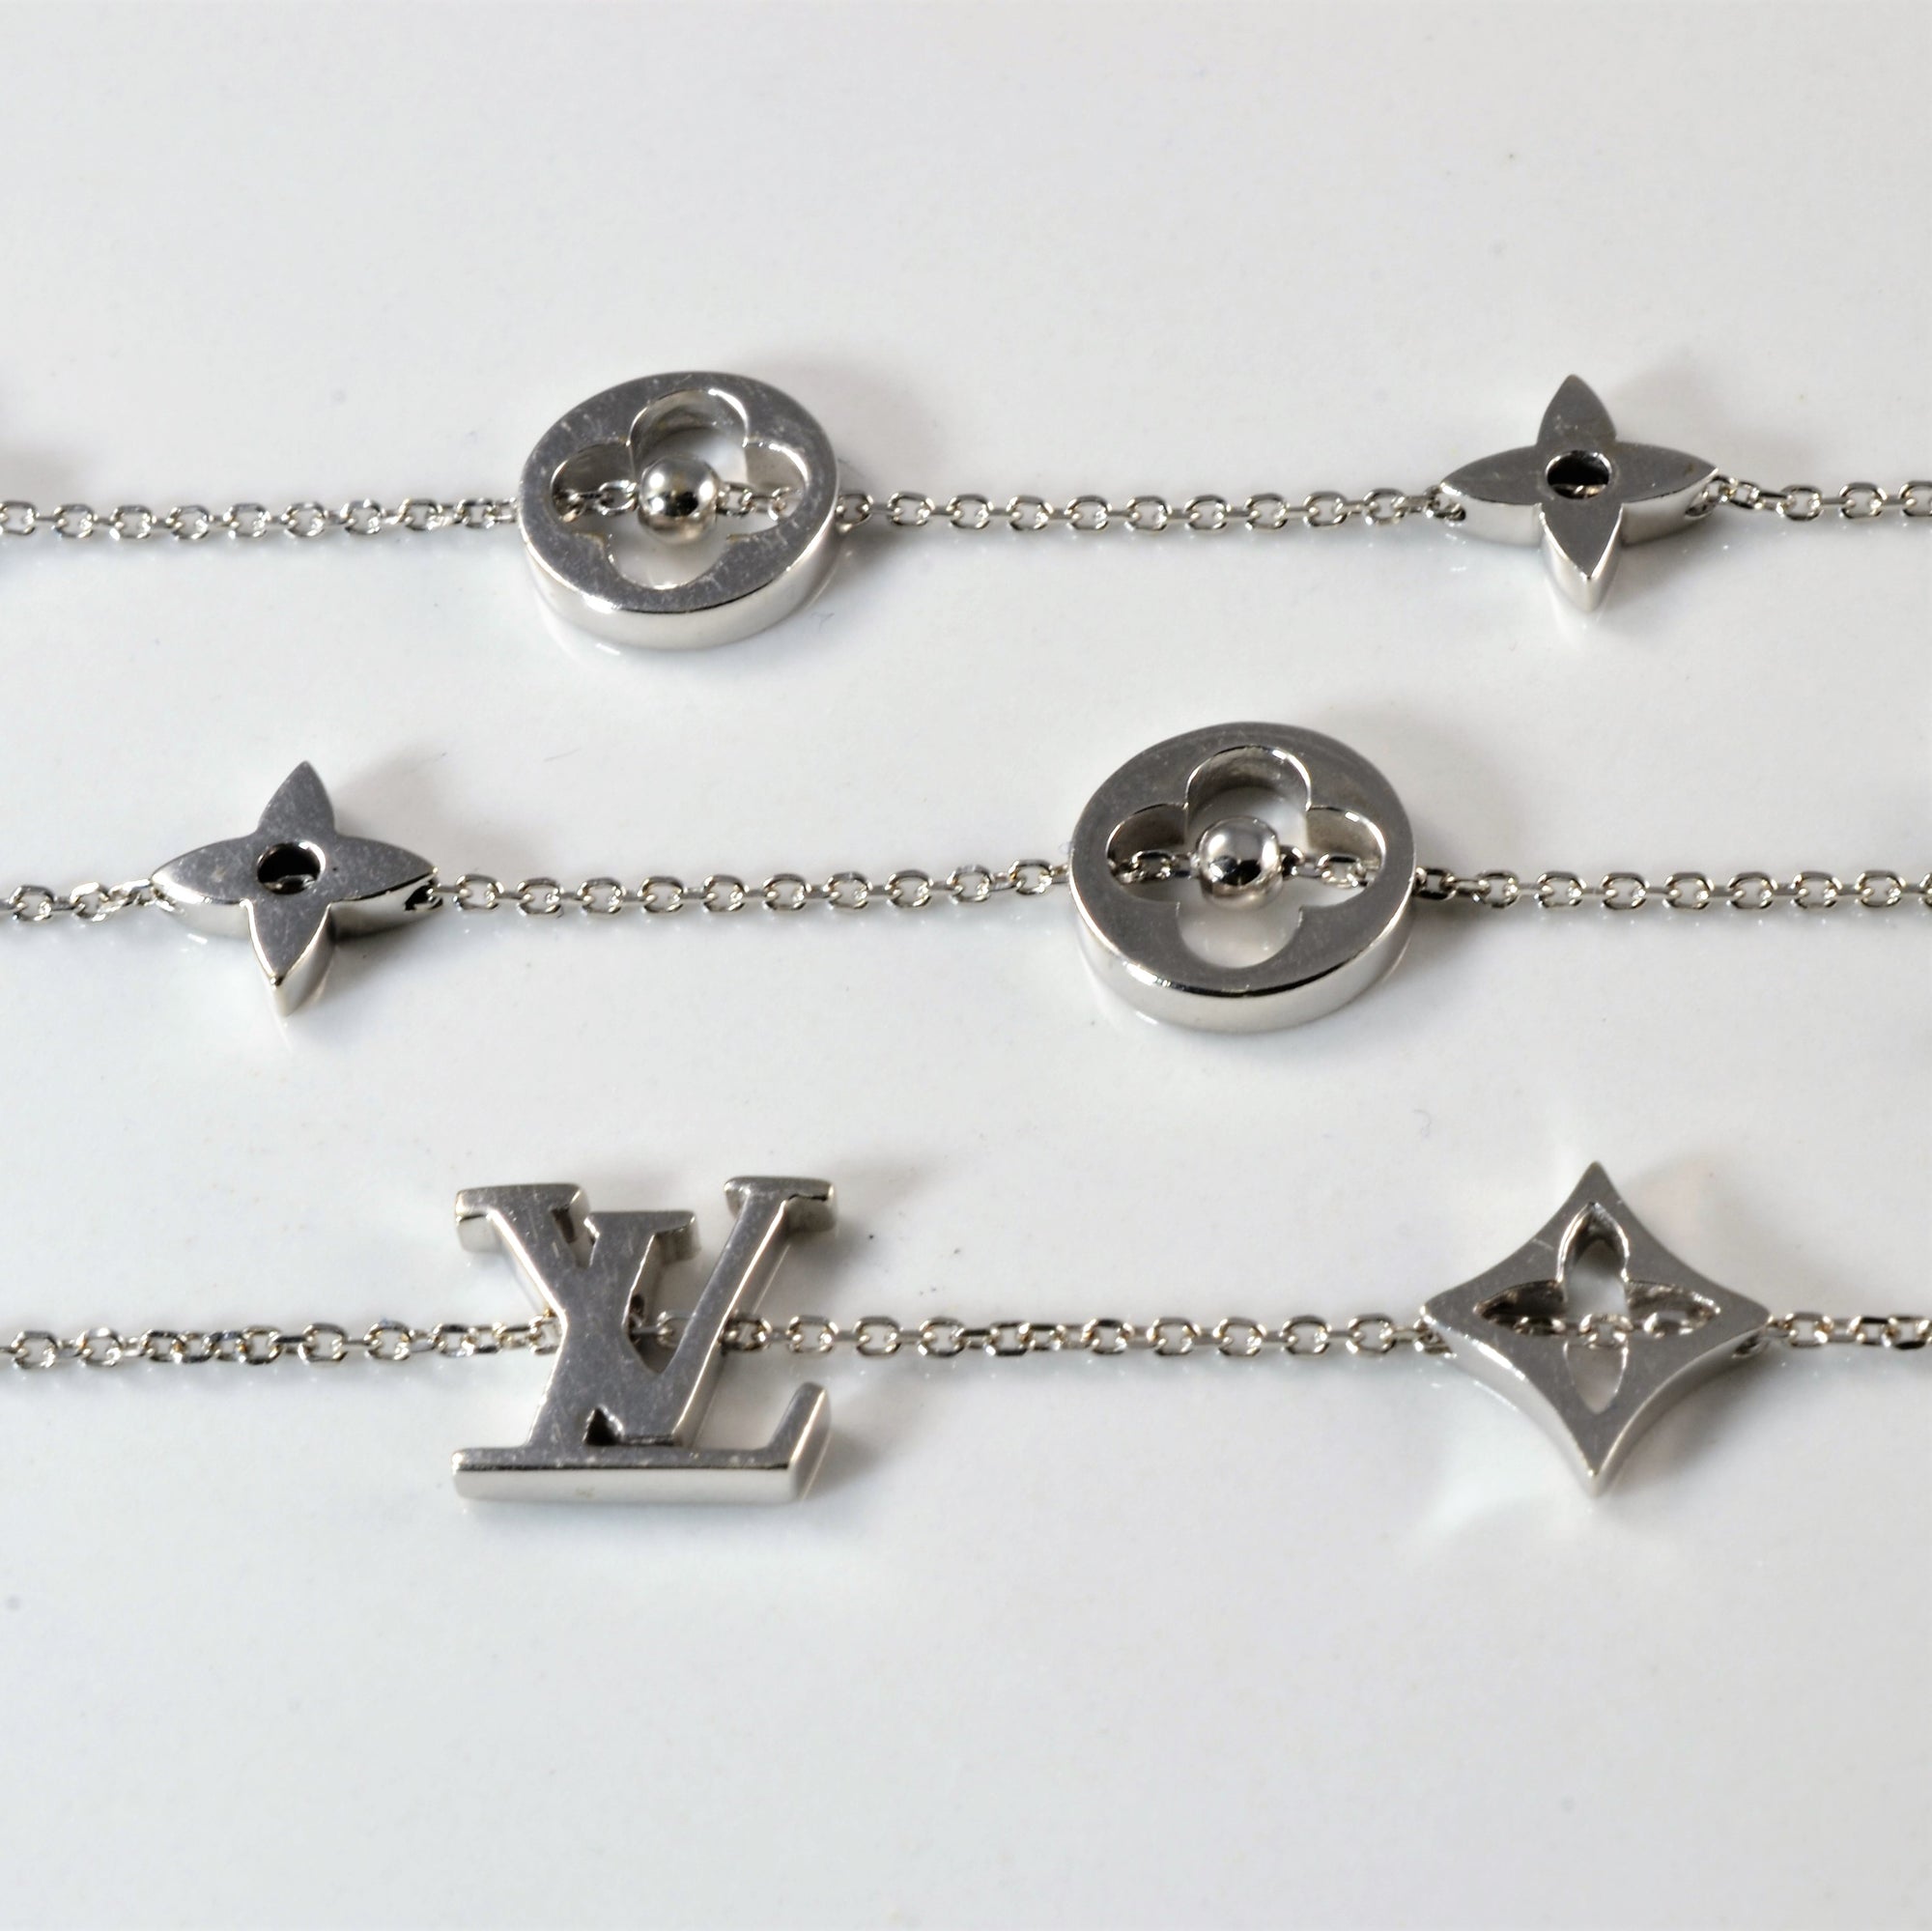 Monogram necklace Louis Vuitton Gold in Metal - 32824655